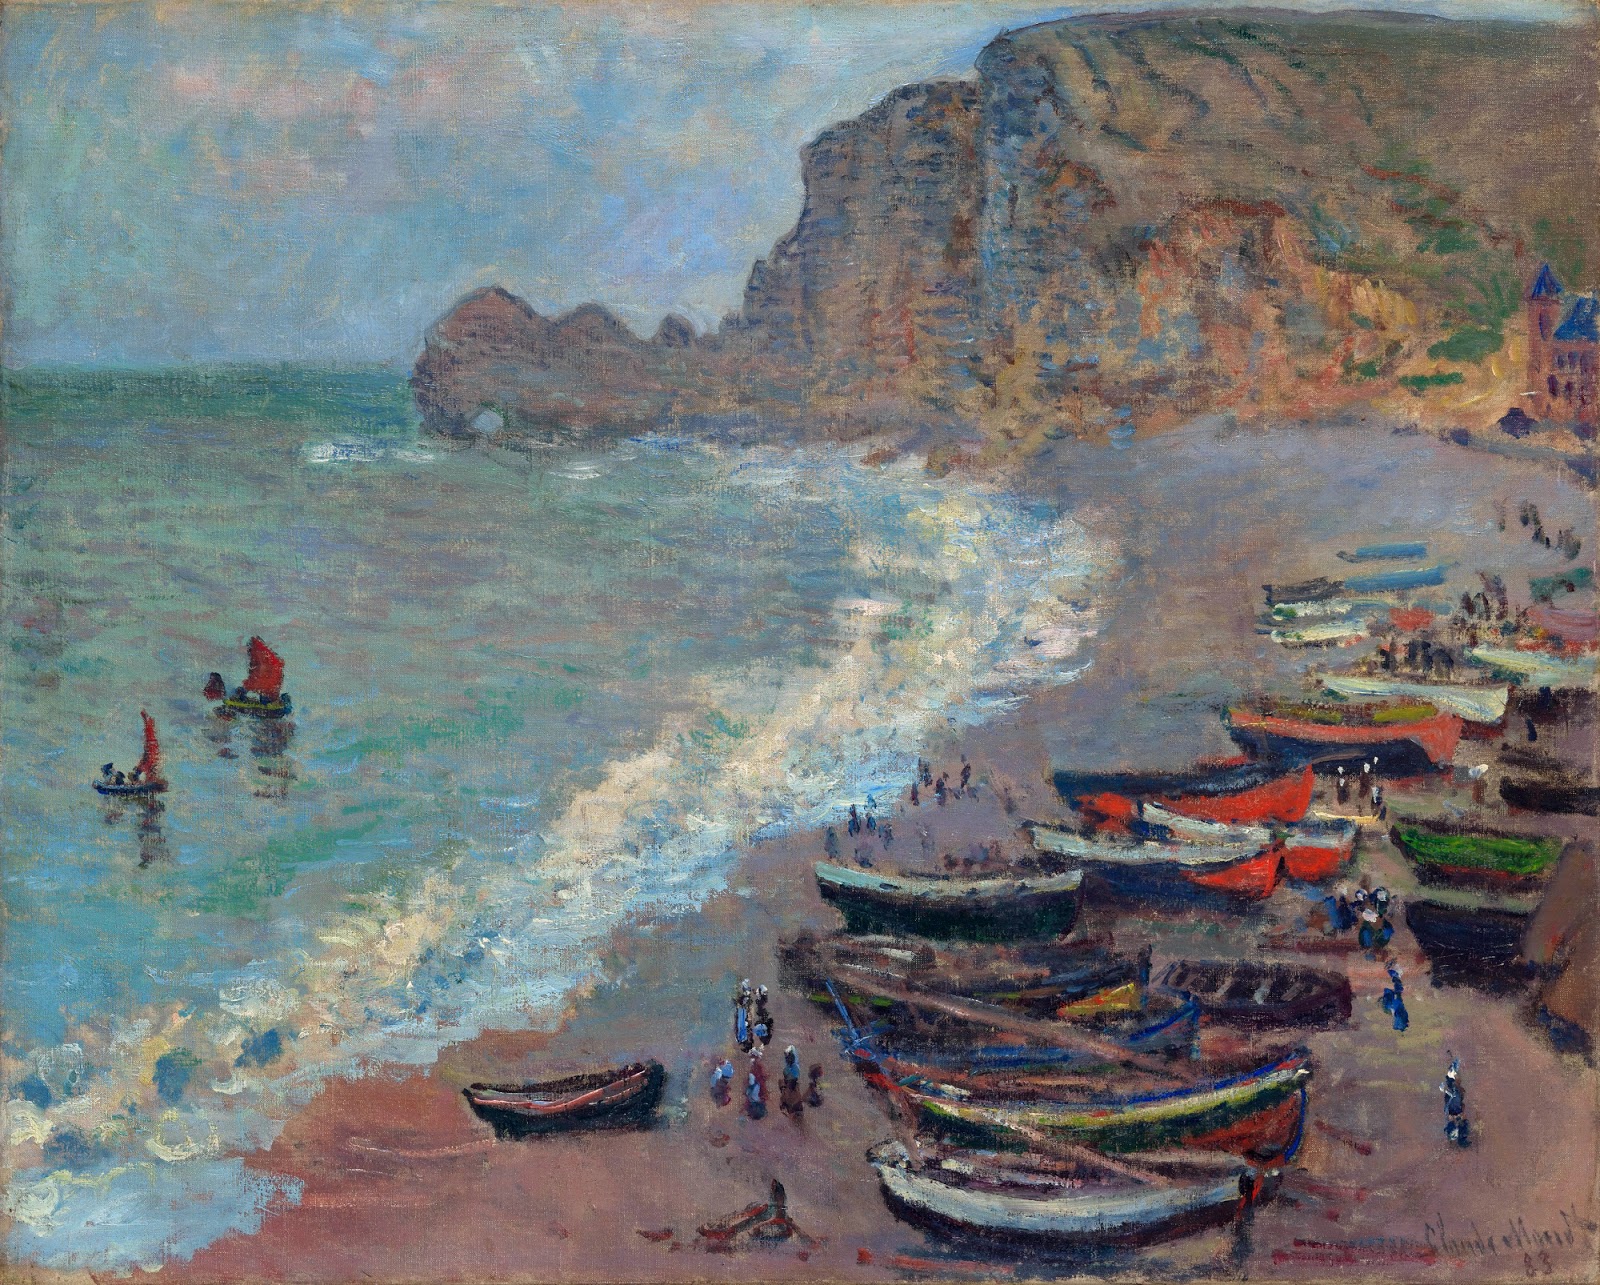 Claude+Monet-1840-1926 (728).jpg